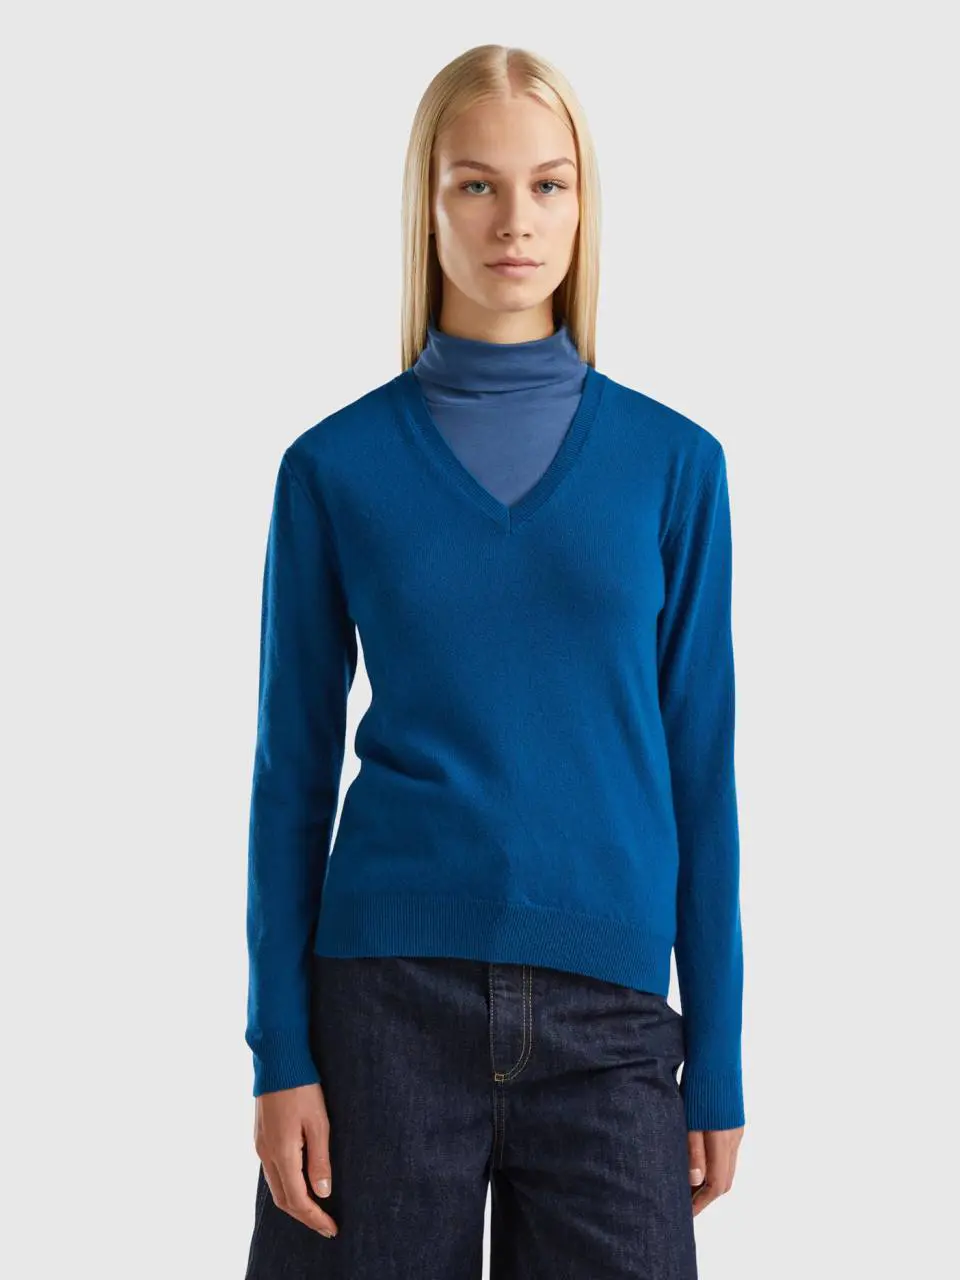 Benetton blue v-neck sweater in pure merino wool. 1